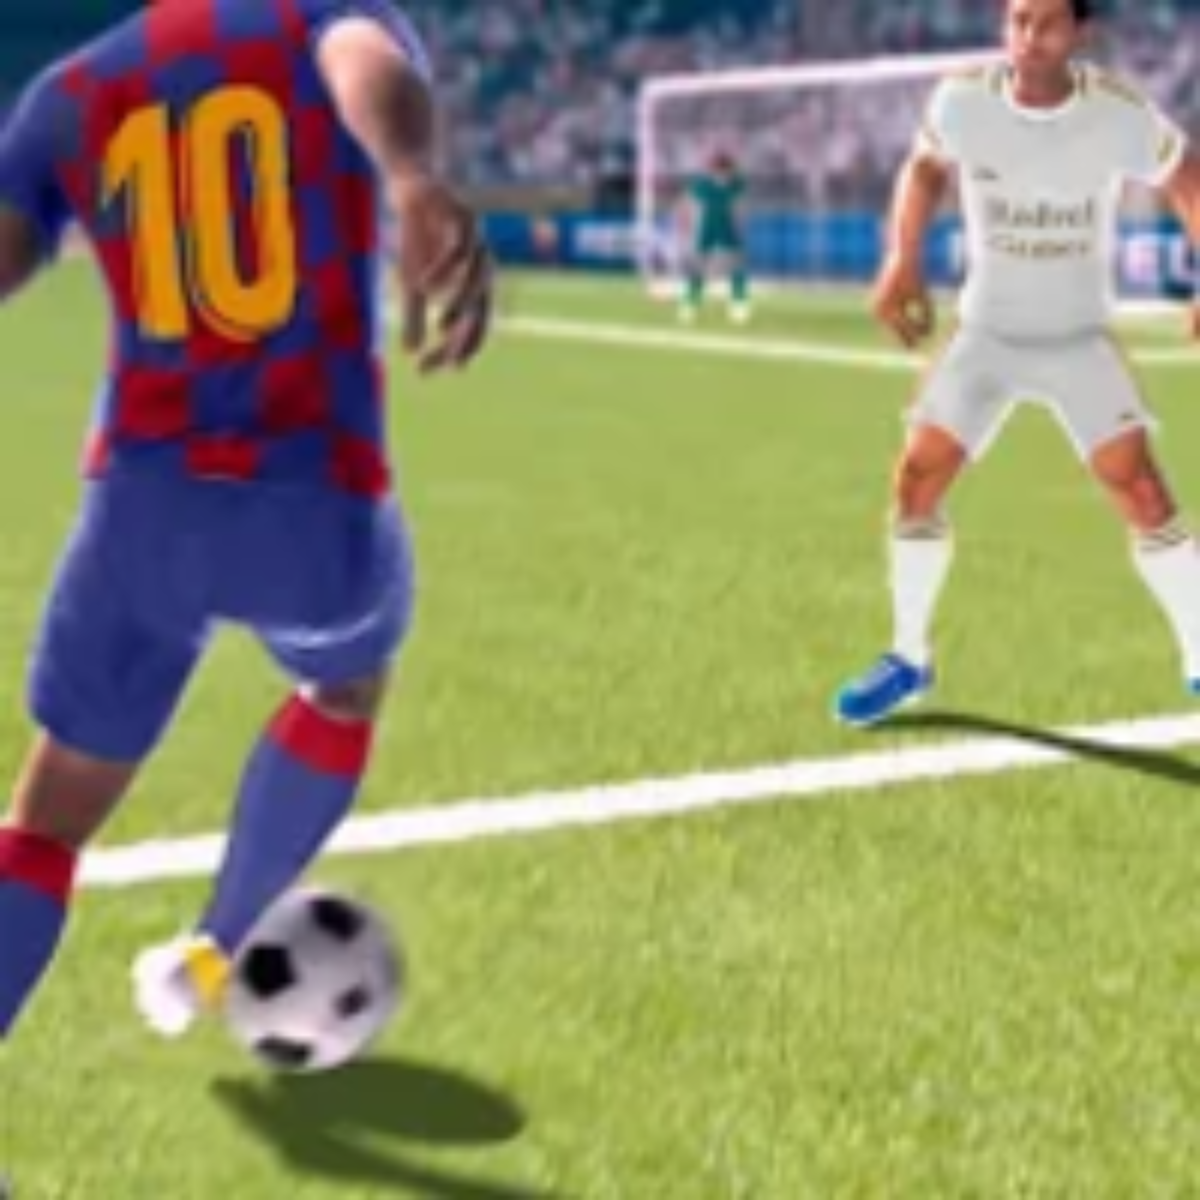 Head Soccer v6.5.1 APK + OBB for Android